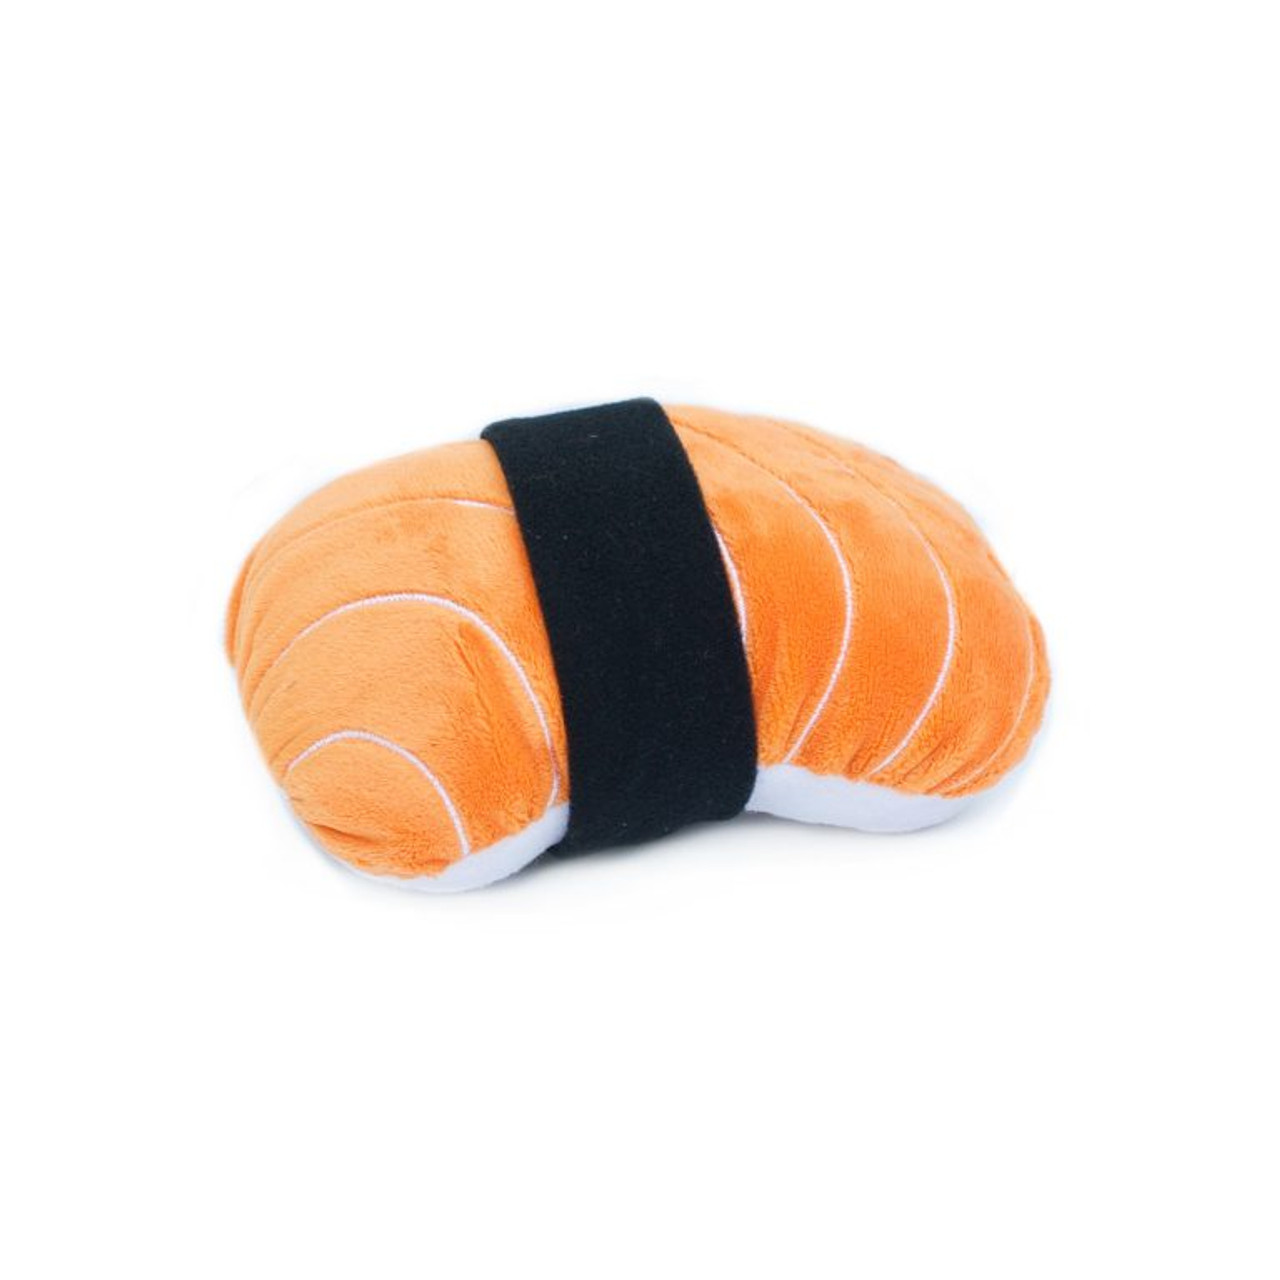 NomNomz Sushi Toy